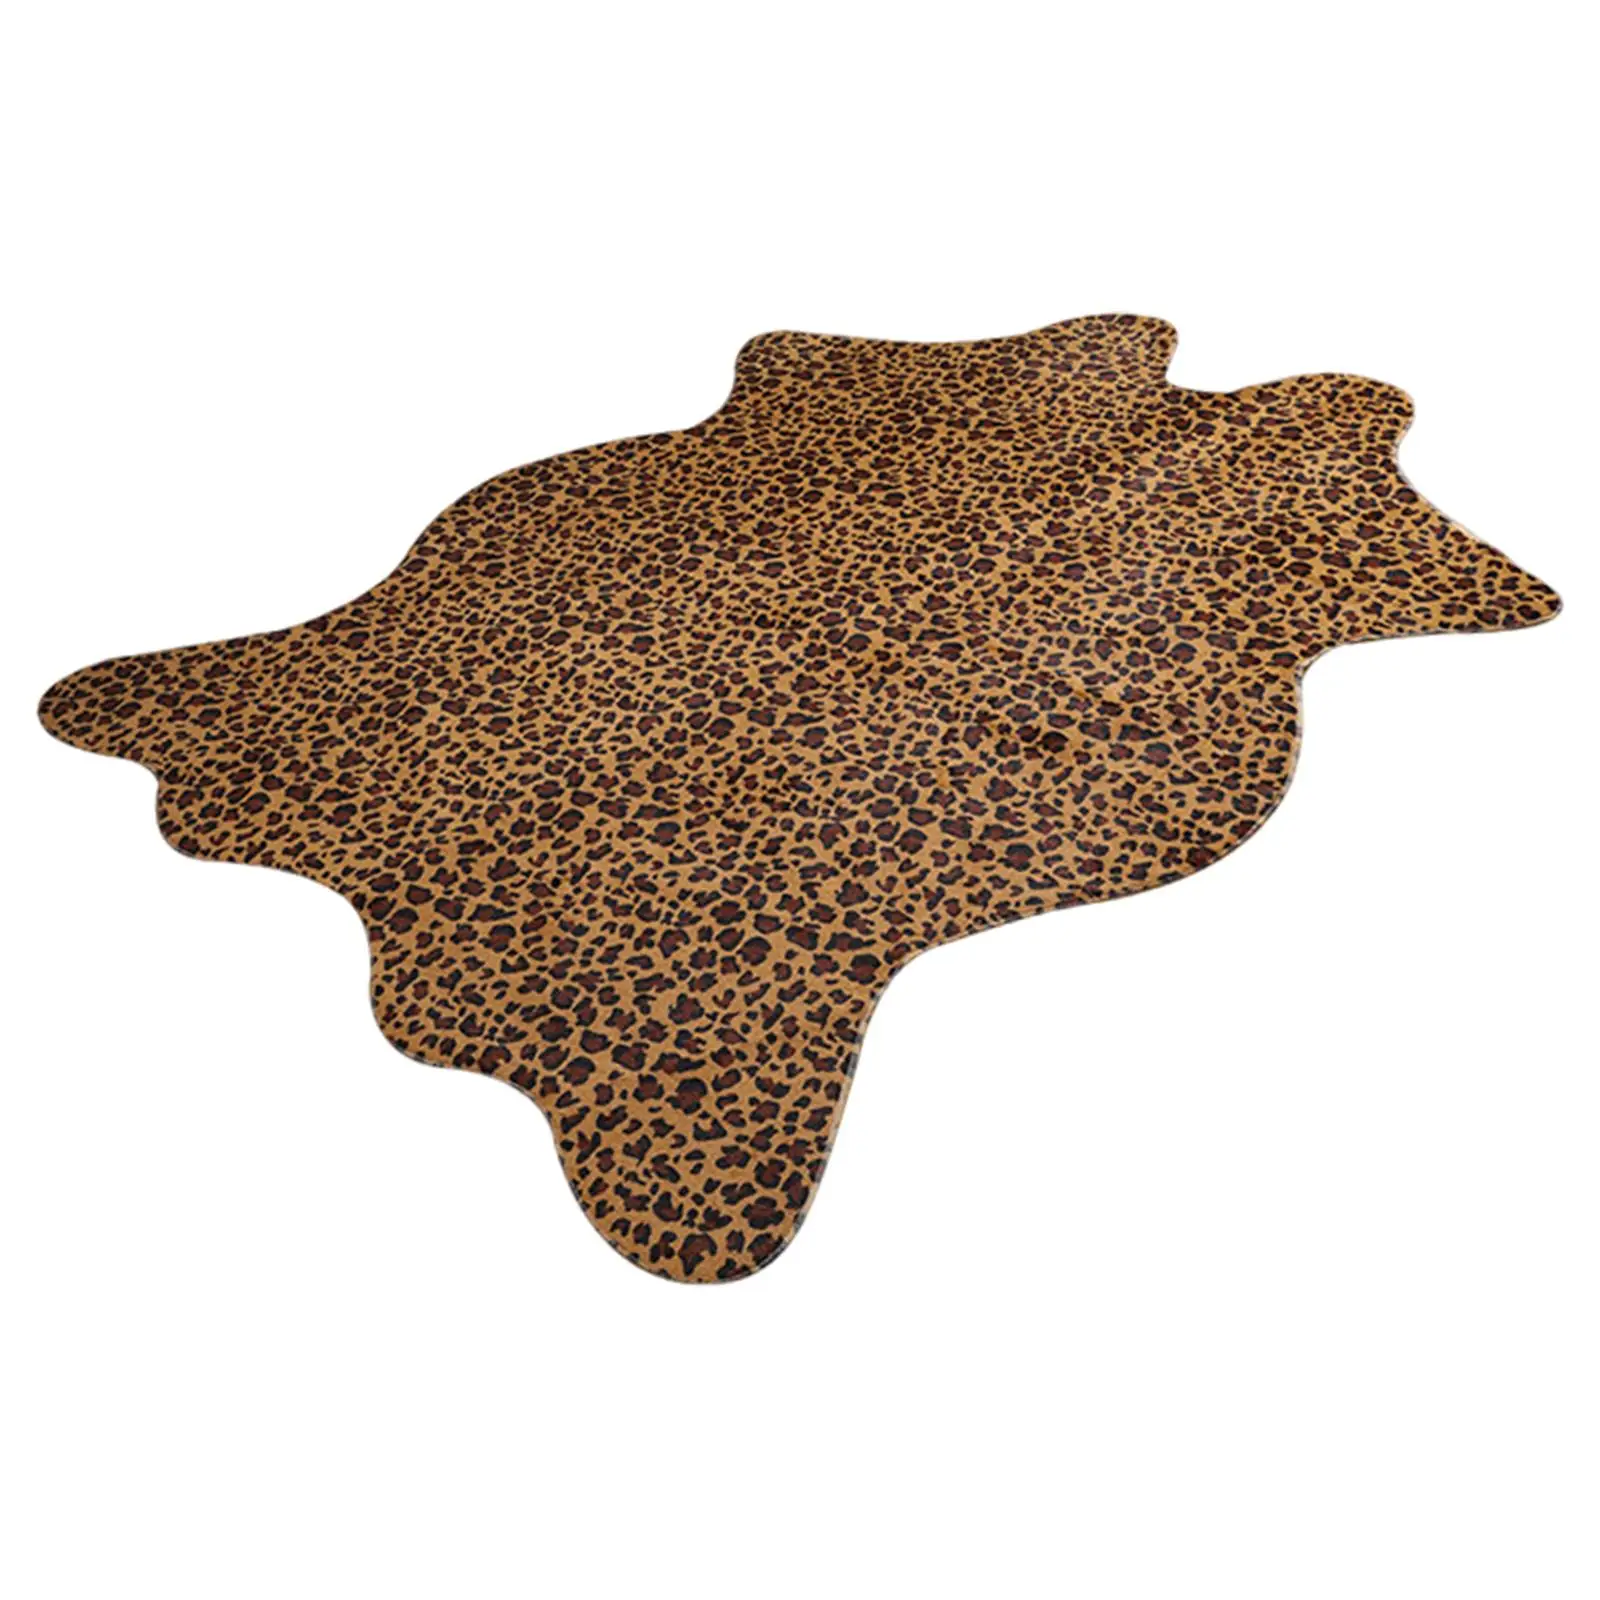 Modern Leopard Print Area Rugs Durable Non  Plush Rugs Polyester 5cm Floor Mat Irregular Door Mat for Home Decor Dorm Bedroom